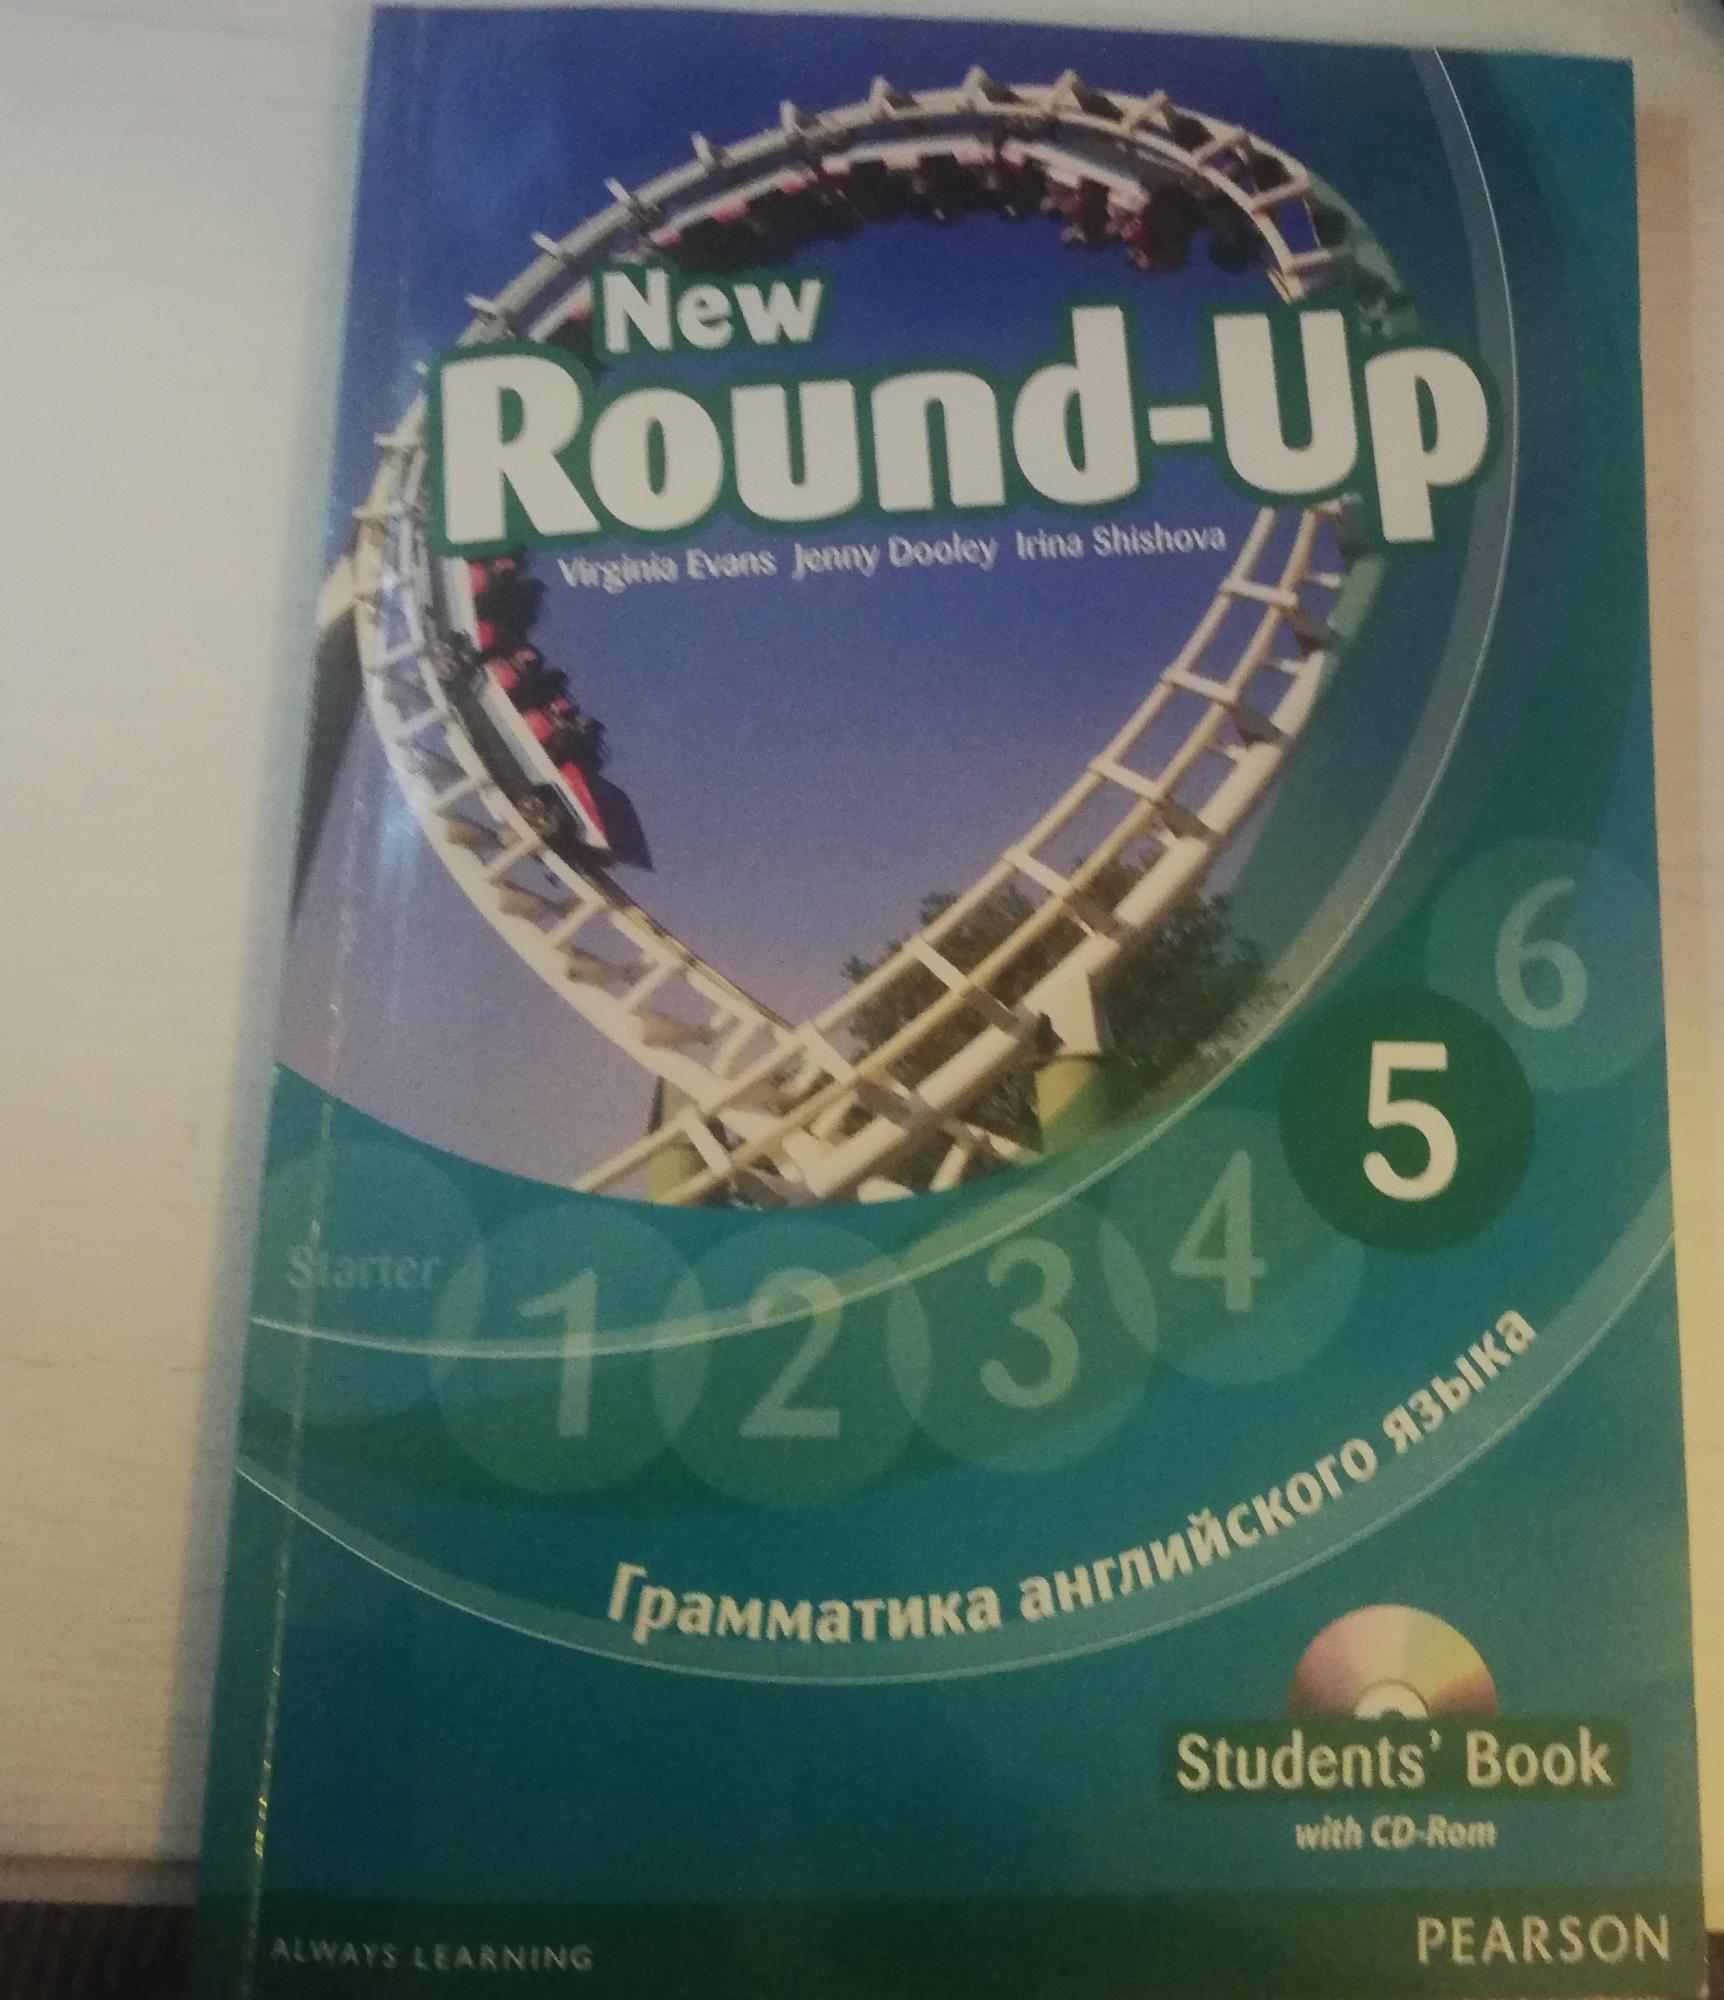 Учебник new round up. New Round up 5. Учебник Round up 5. Учебник Round up 1. New Round up 1.